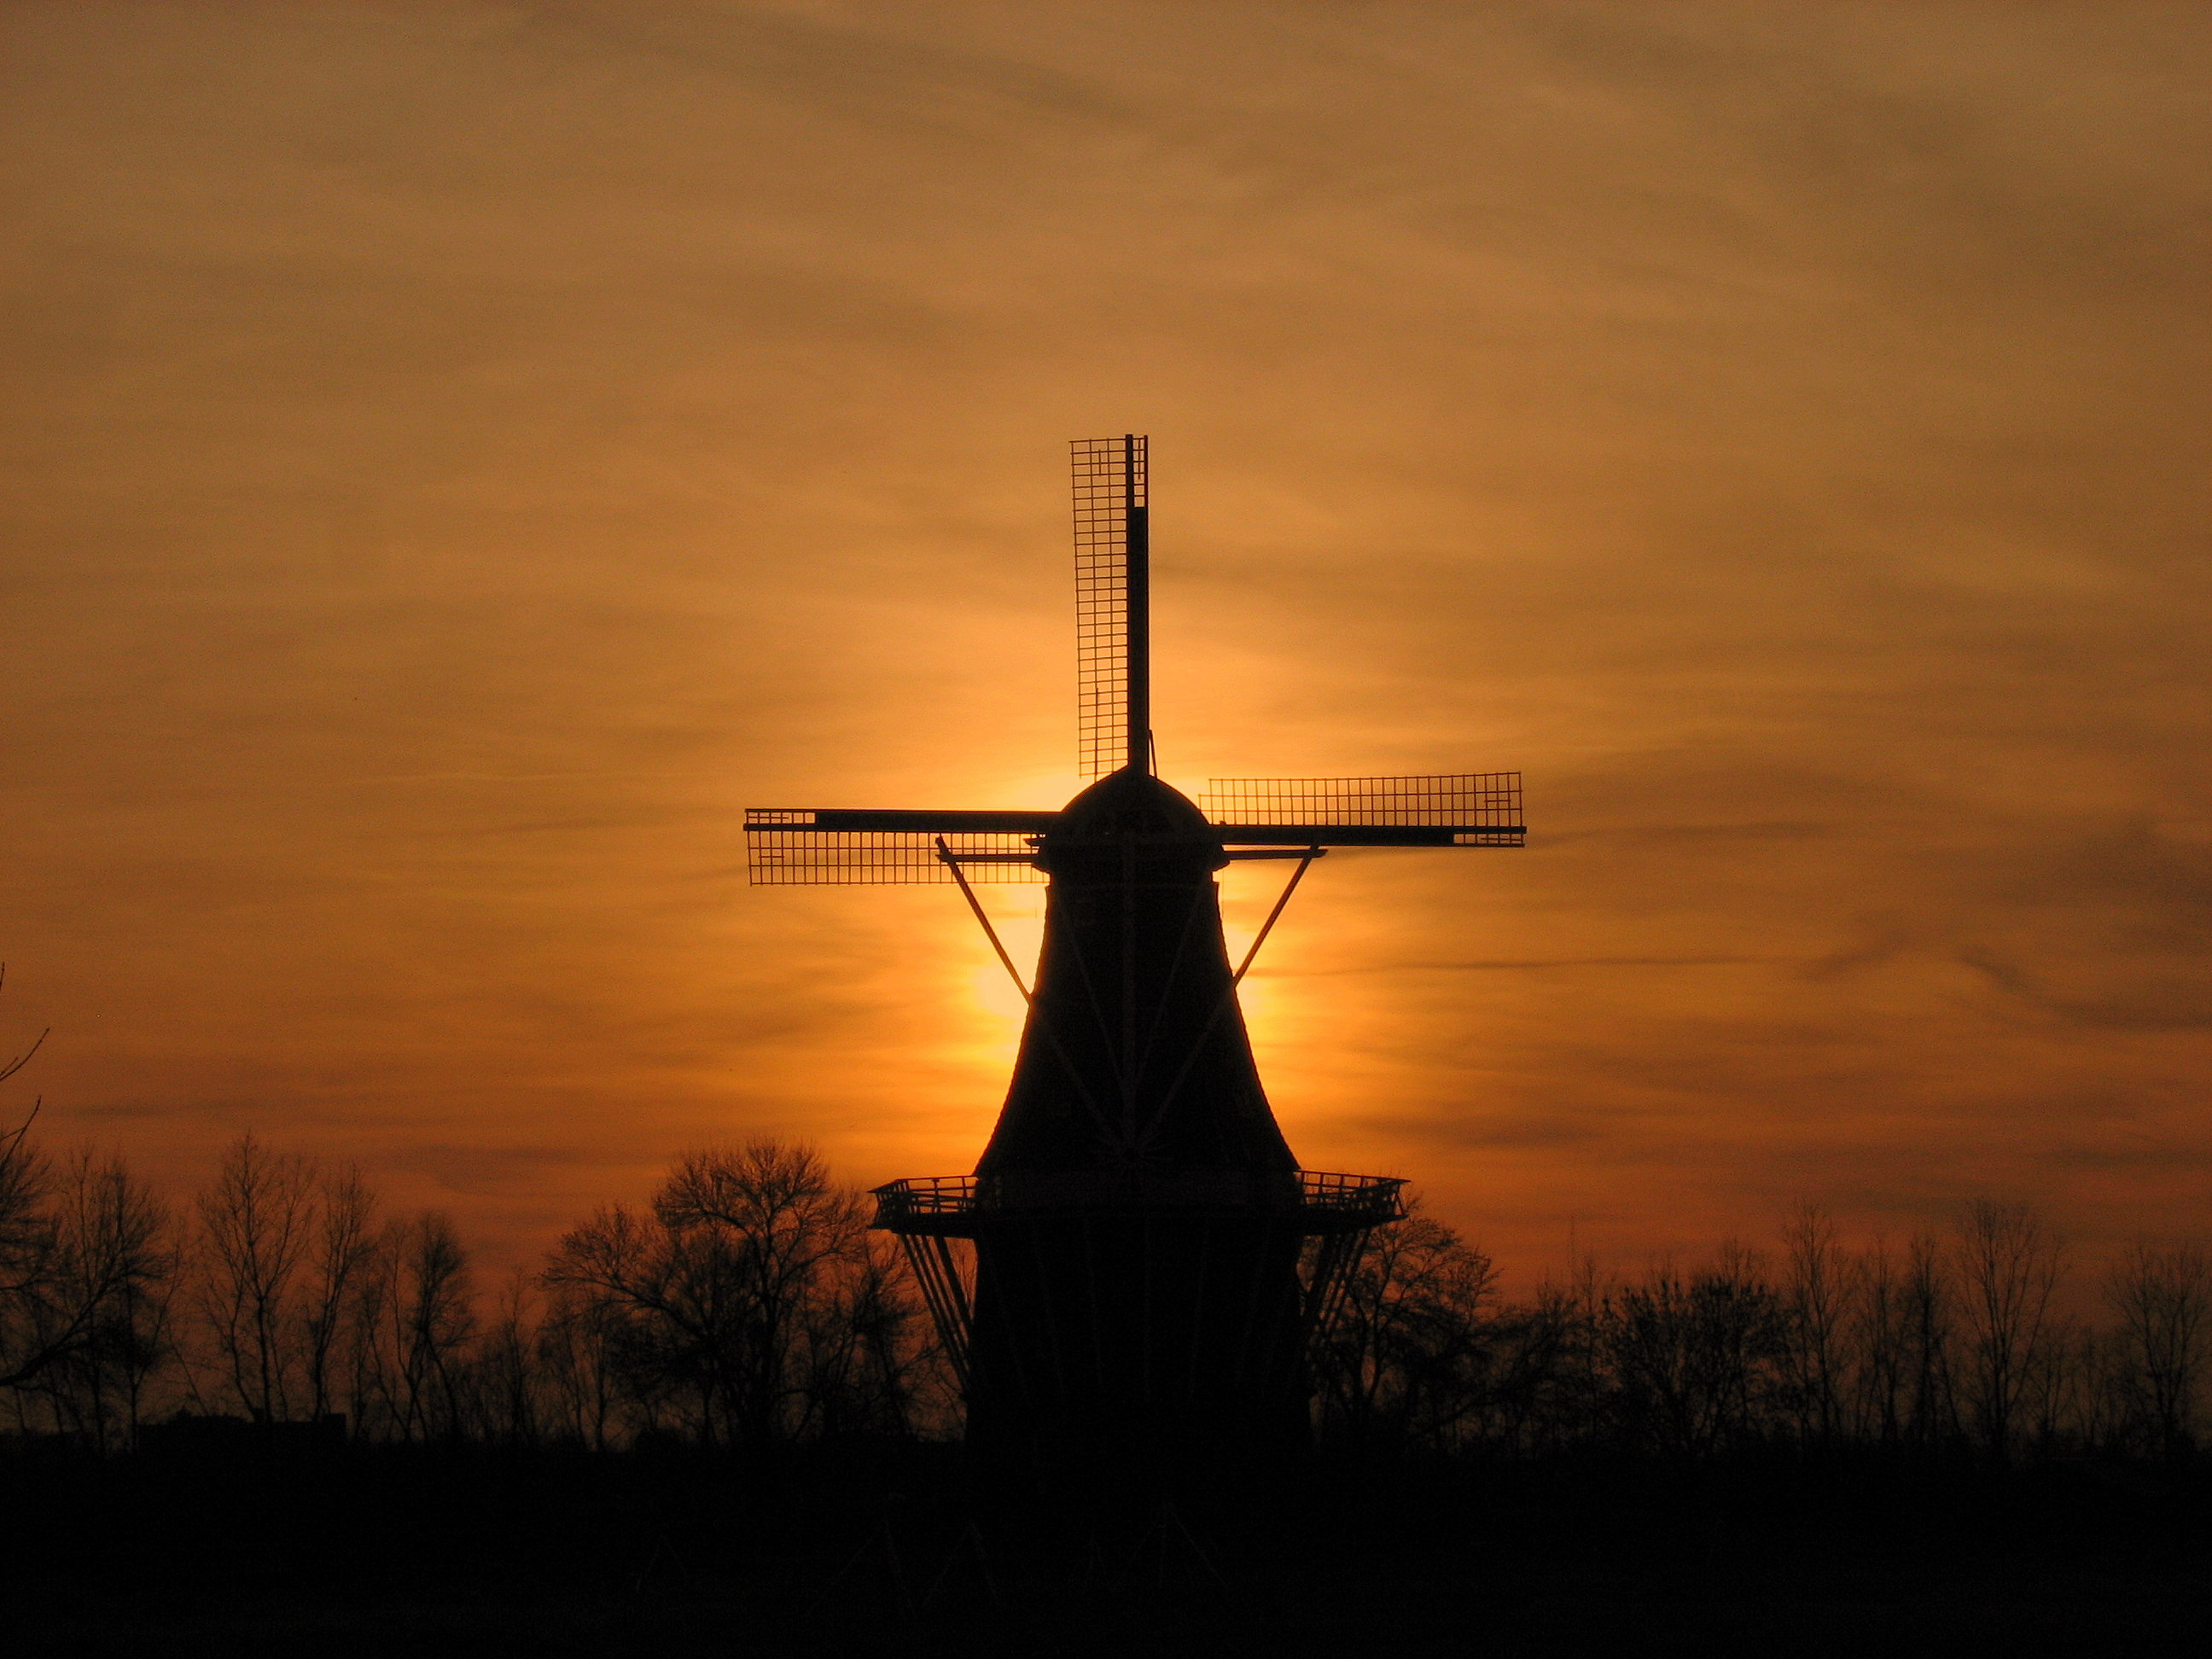 man made, windmill, sunset